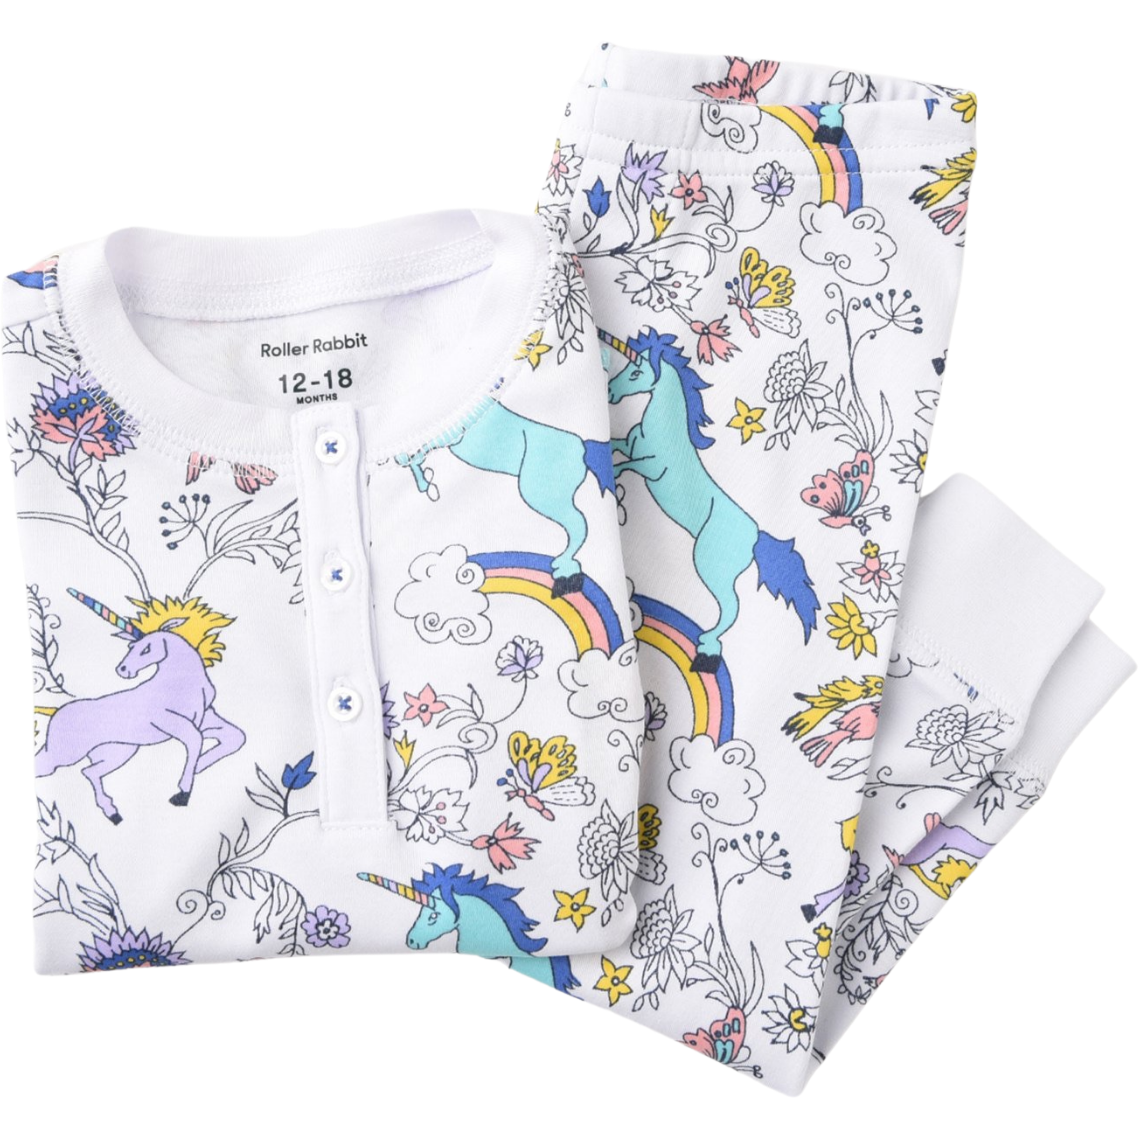 Roller Rabbit Dream for All Unicorn Toddler Pajama Set